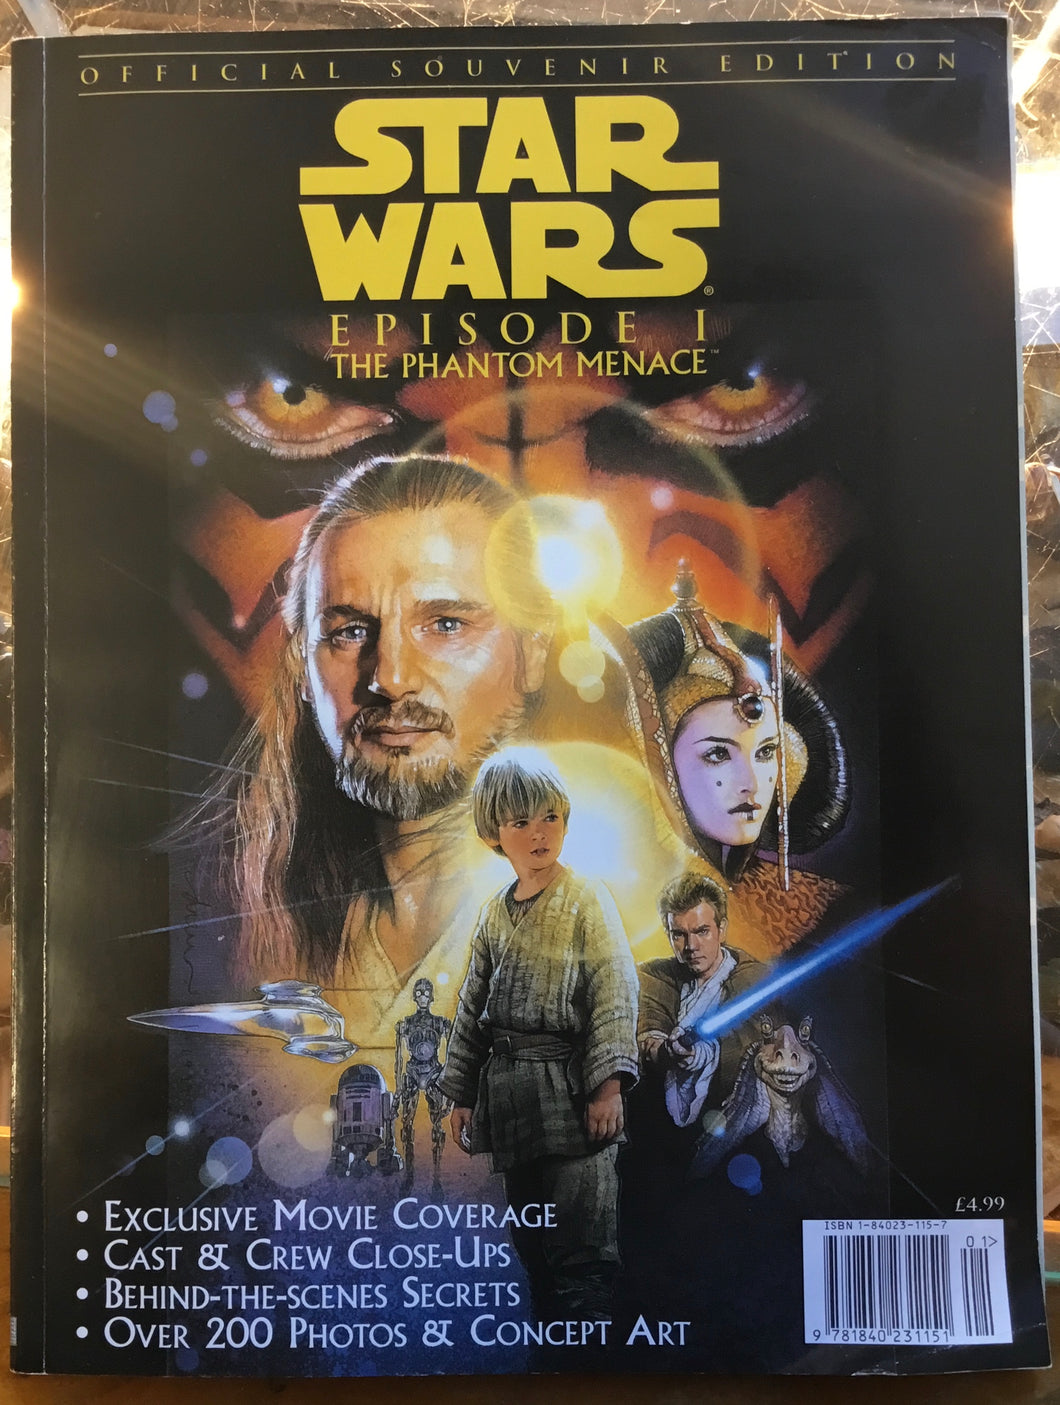 Star Wars Episode I The Phantom Menace Official Souvenir Edition